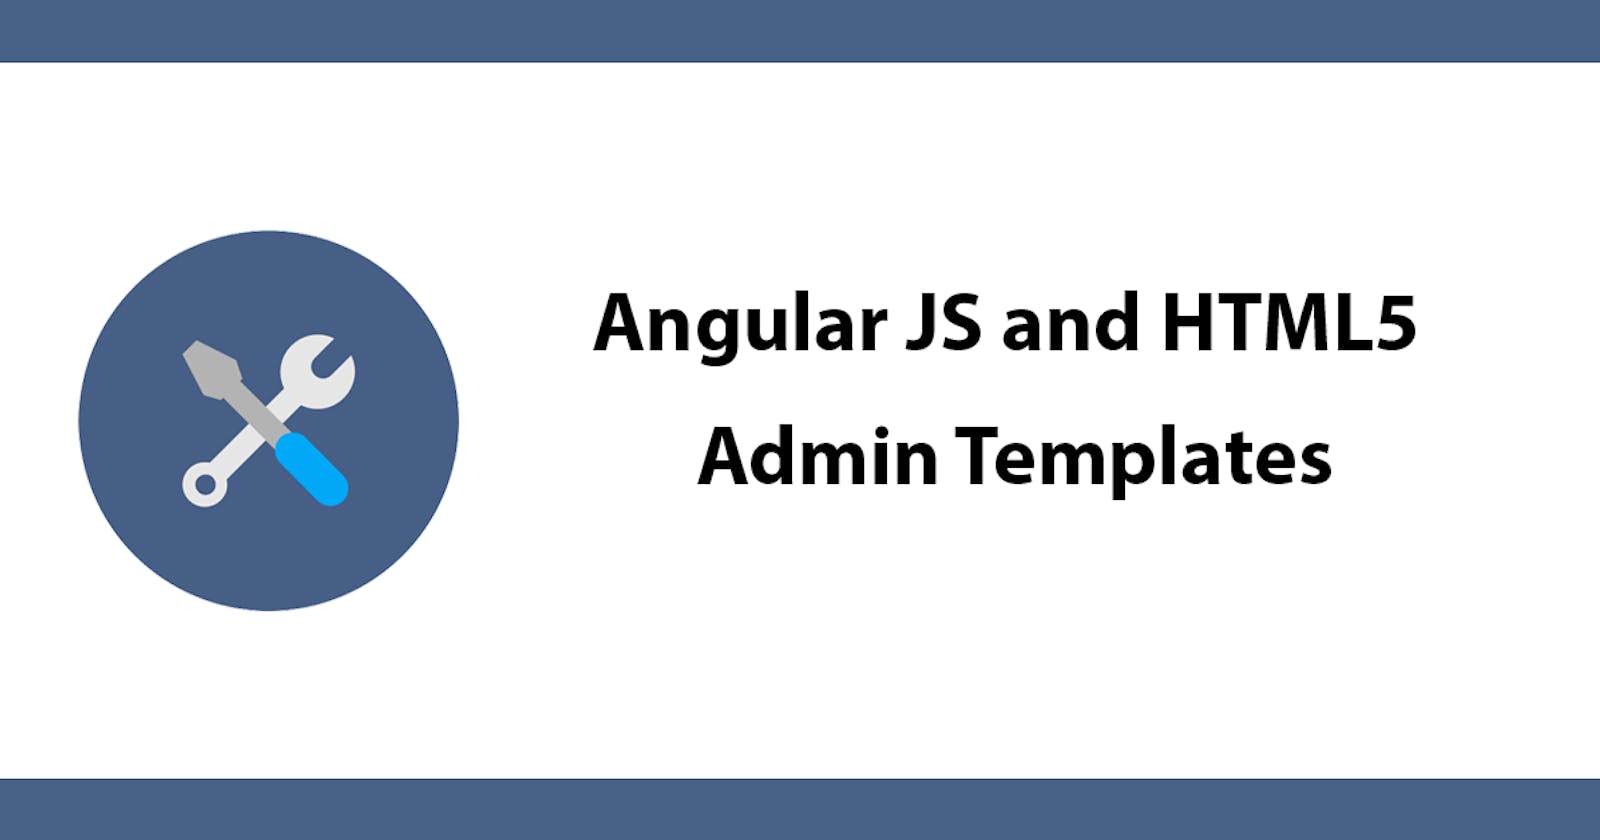 Angular JS and HTML5 Admin Templates